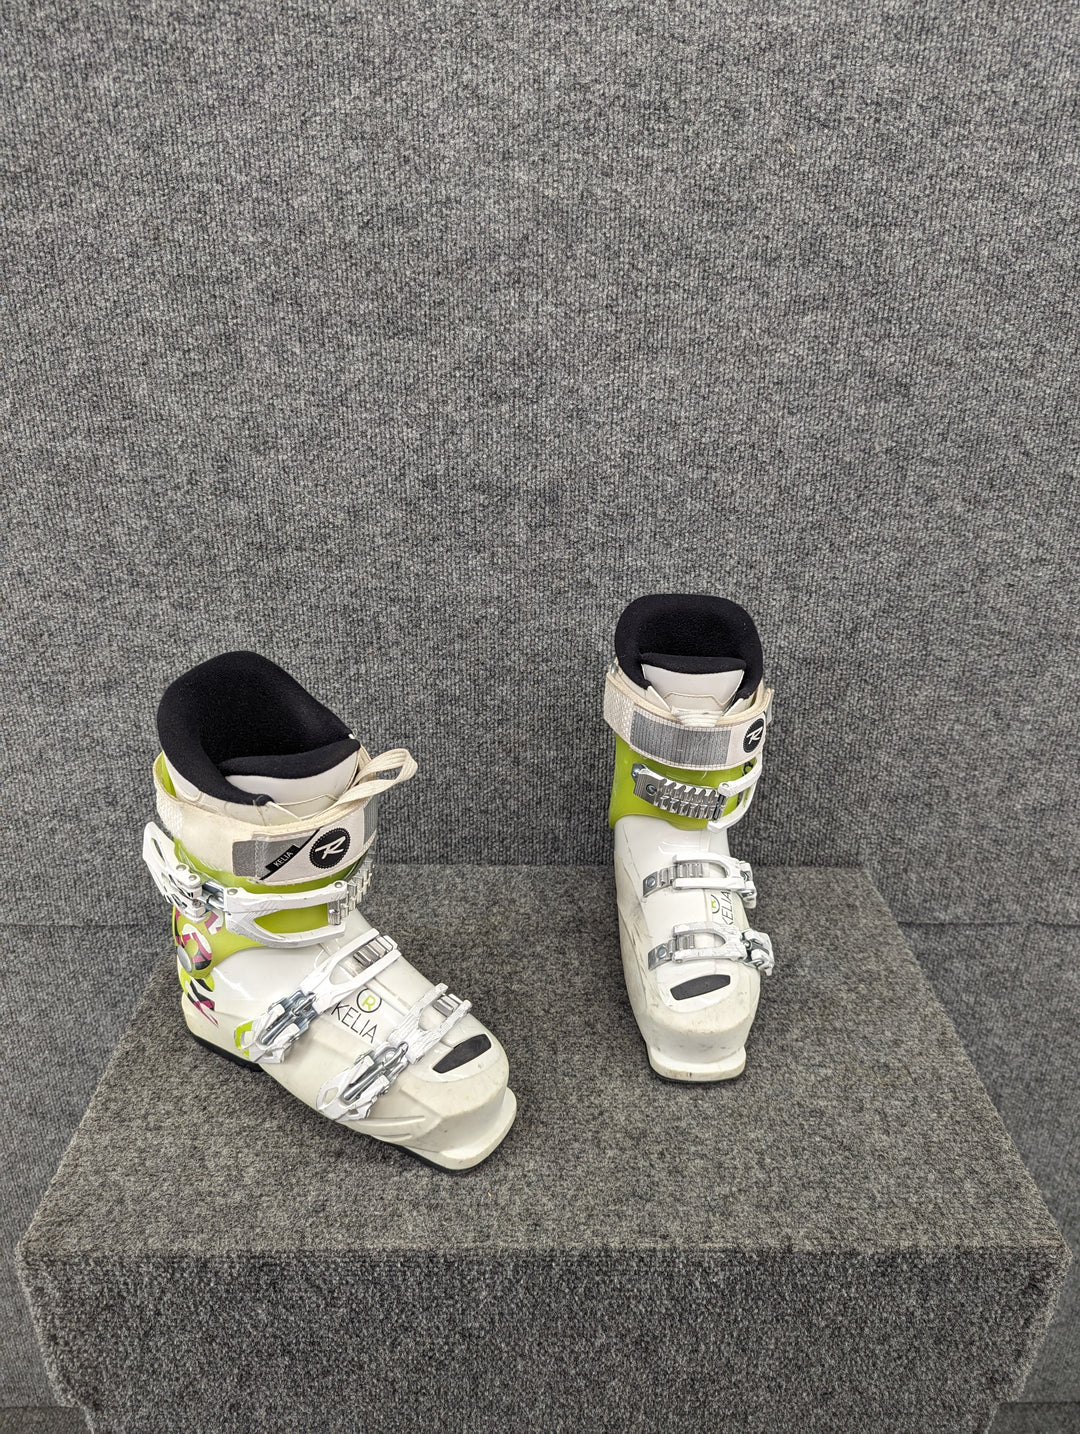 Rossignol Size W5.5/22.5 Women's Alpine Ski Boots